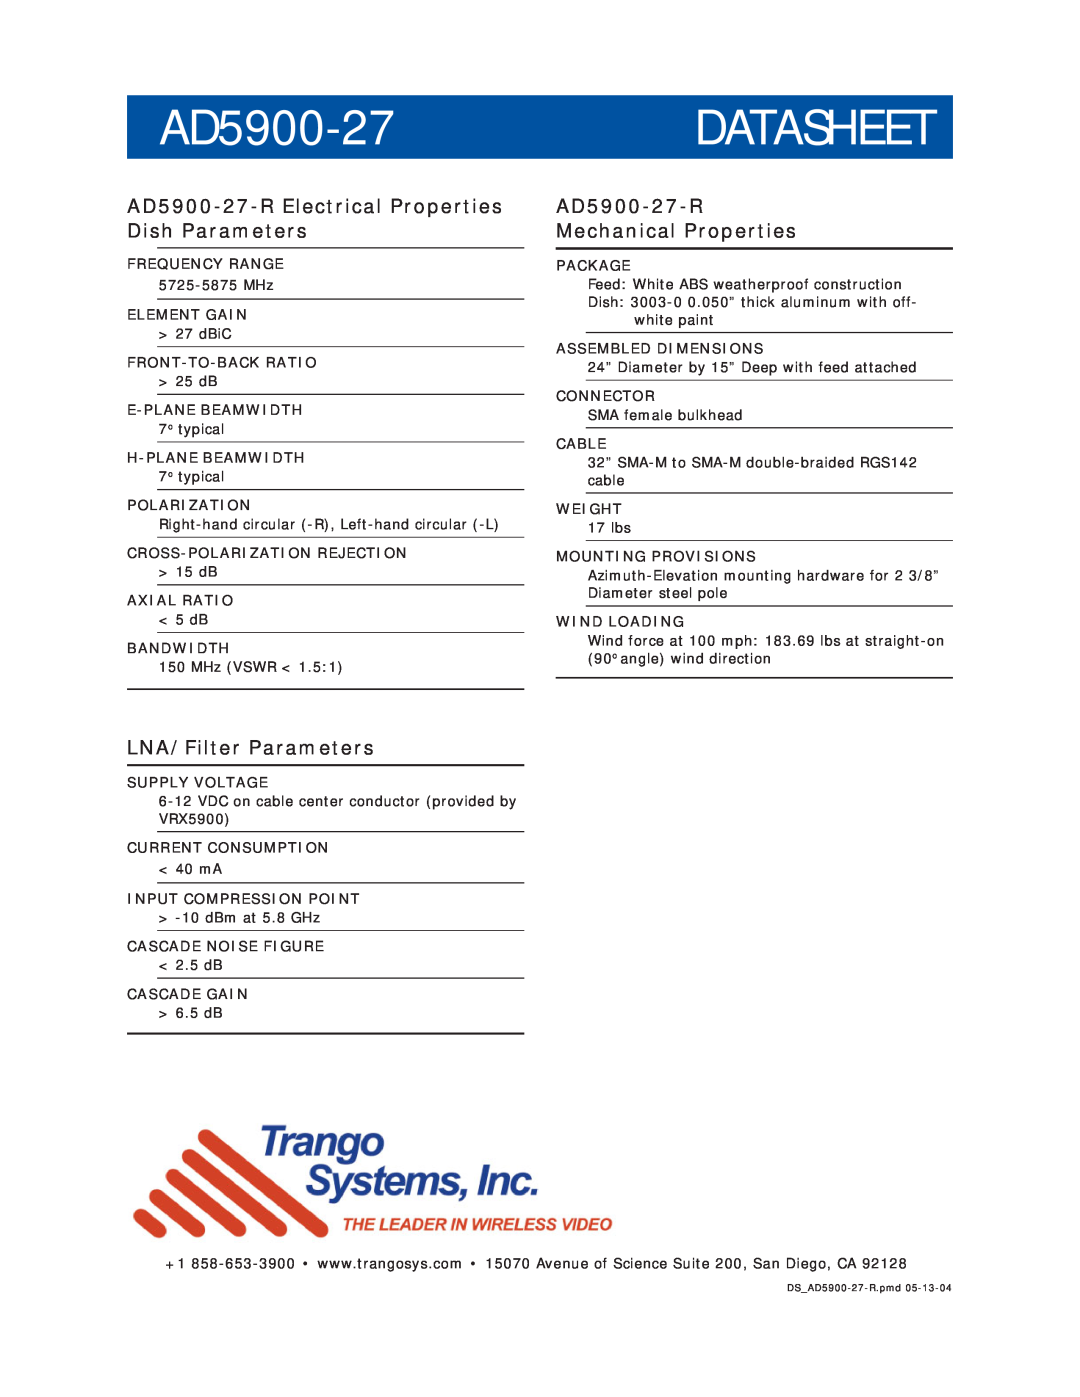 Trango Broadband manual AD5900-27DATASHEET, AD5900-27-R Electrical Properties Dish Parameters, LNA/Filter Parameters 